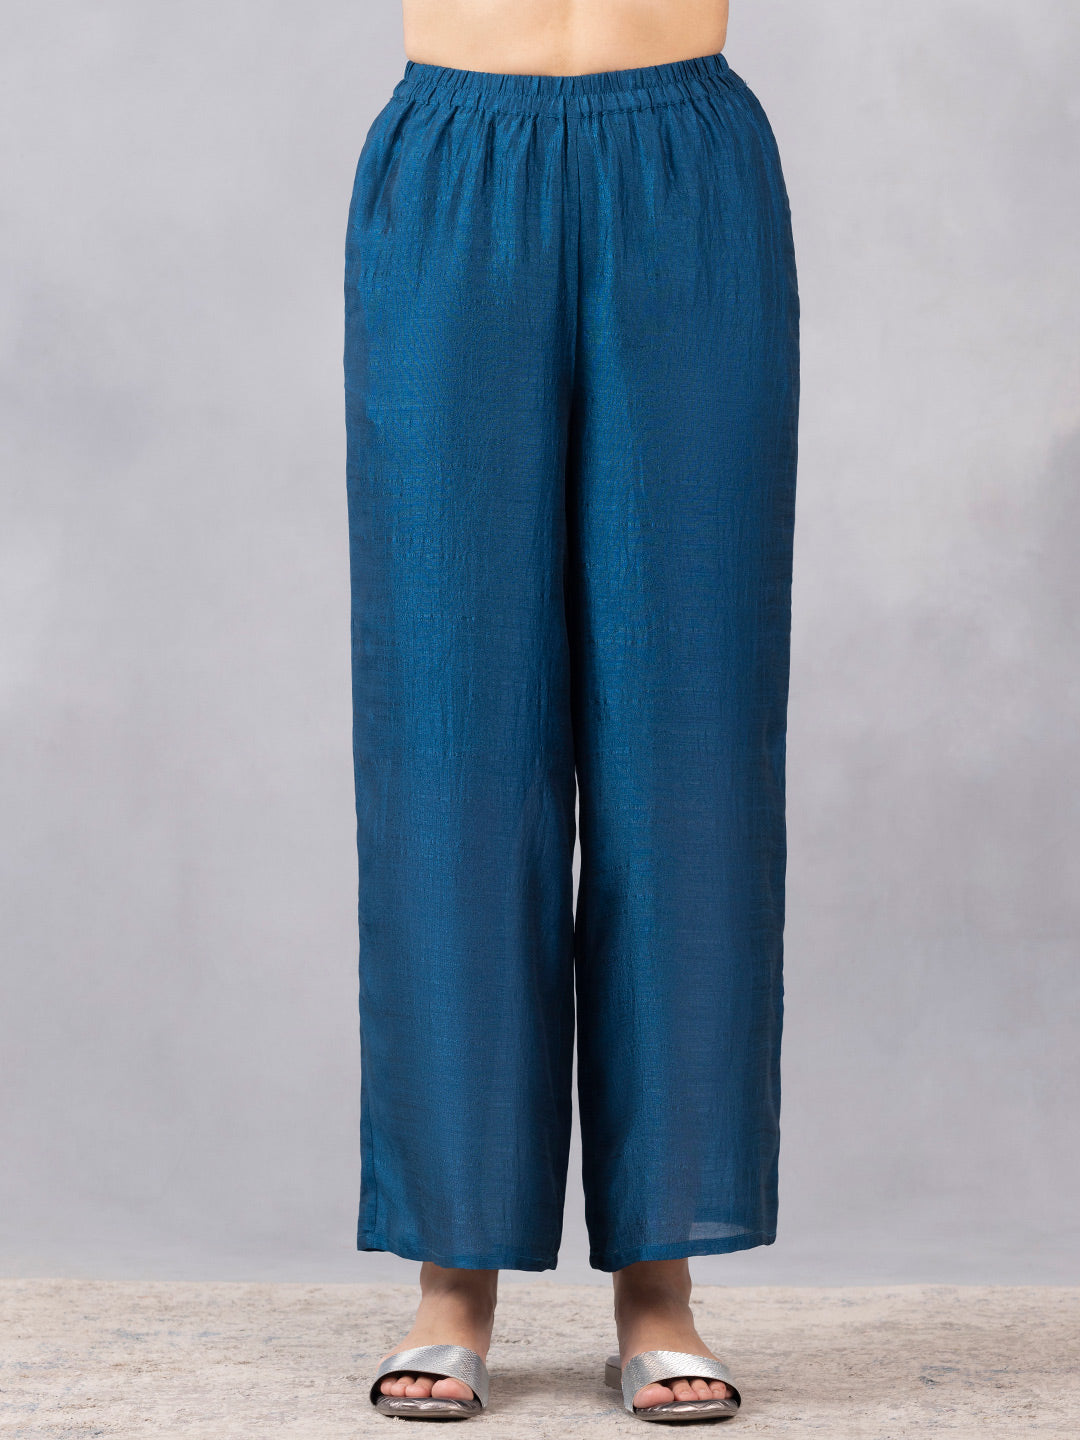 Teal Blue Chanderi Straight Kurta Set from Shaye , Kurta Pajama 2 piece set for women